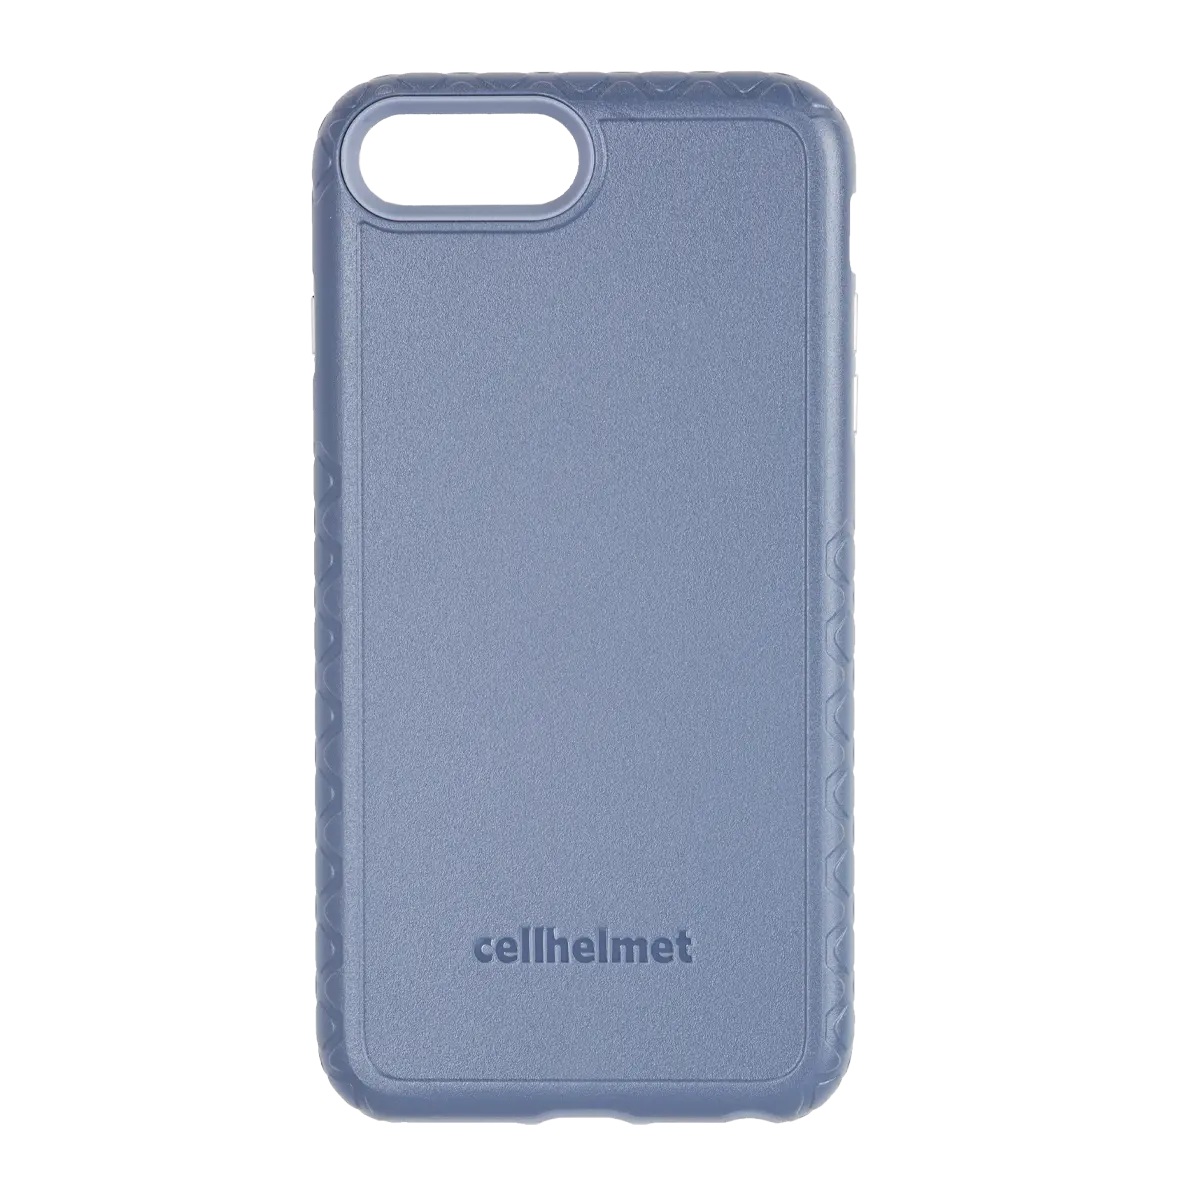 Blue cellhelmet Customizable Case for iPhone 8 Plus